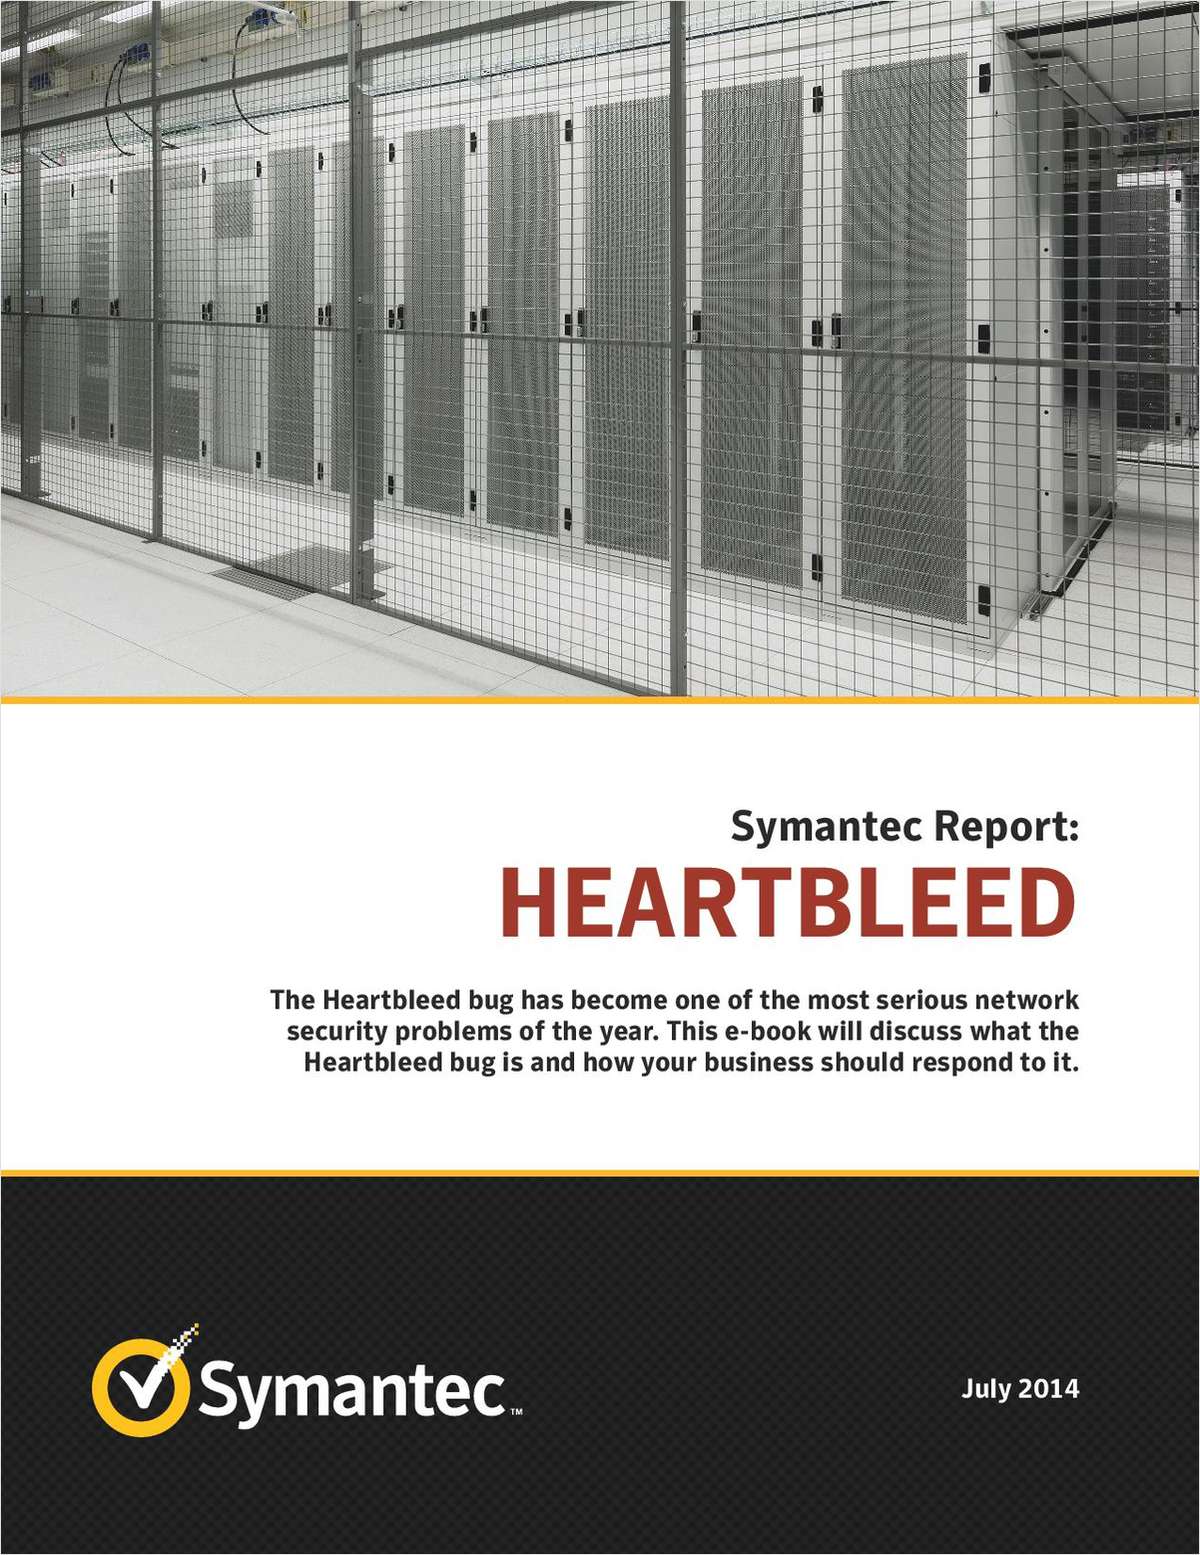 Symantec Report: Heartbleed